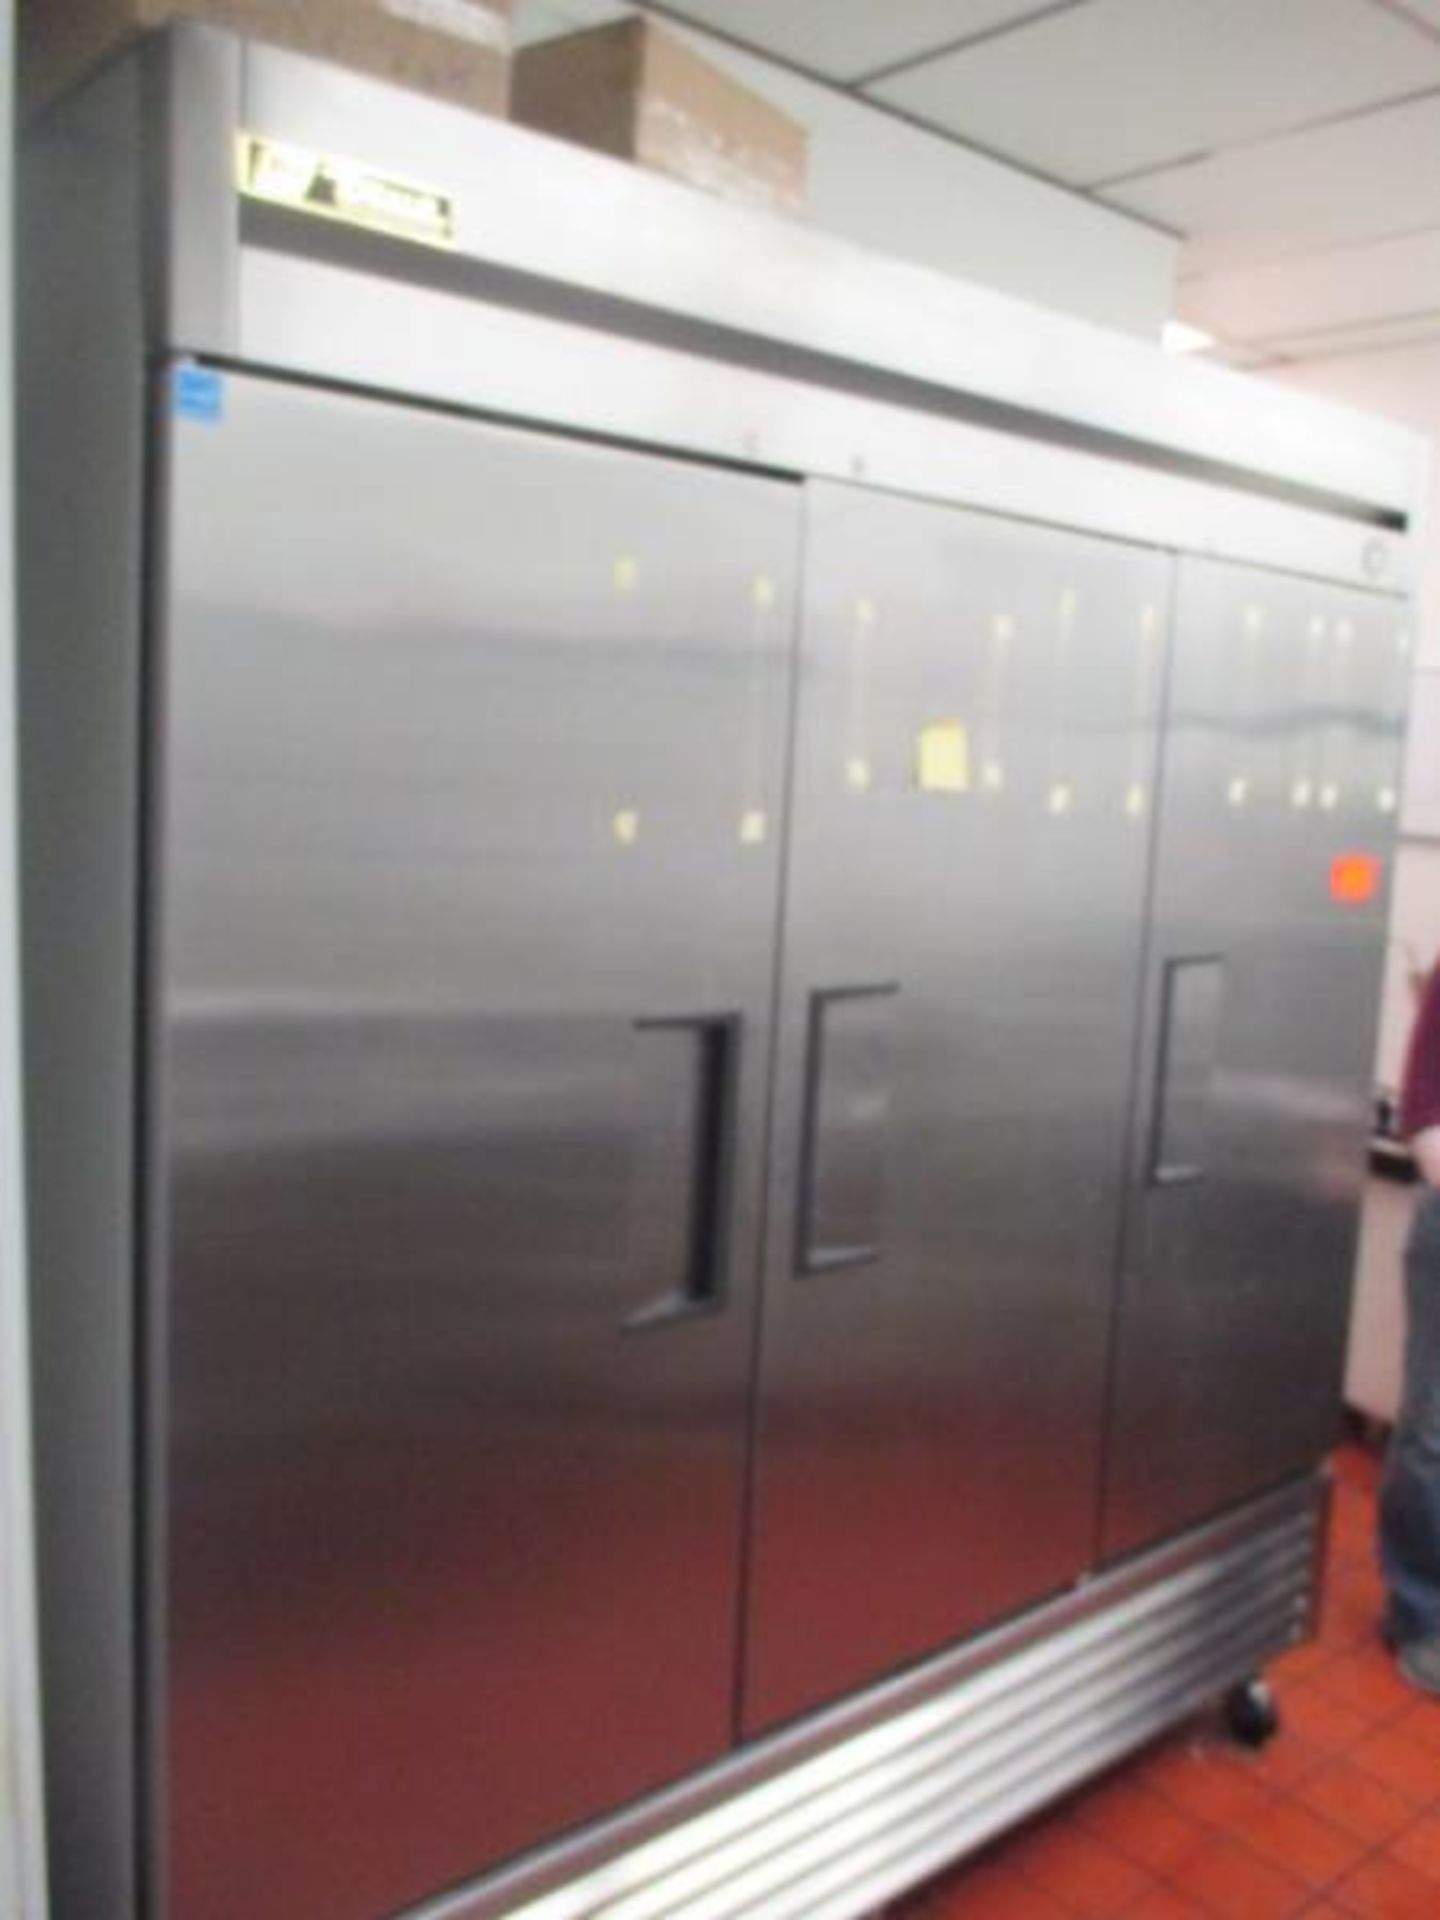 Three Door Reach In Refrigerator by True, Model: T-72, SN: 7266711 - Image 2 of 3